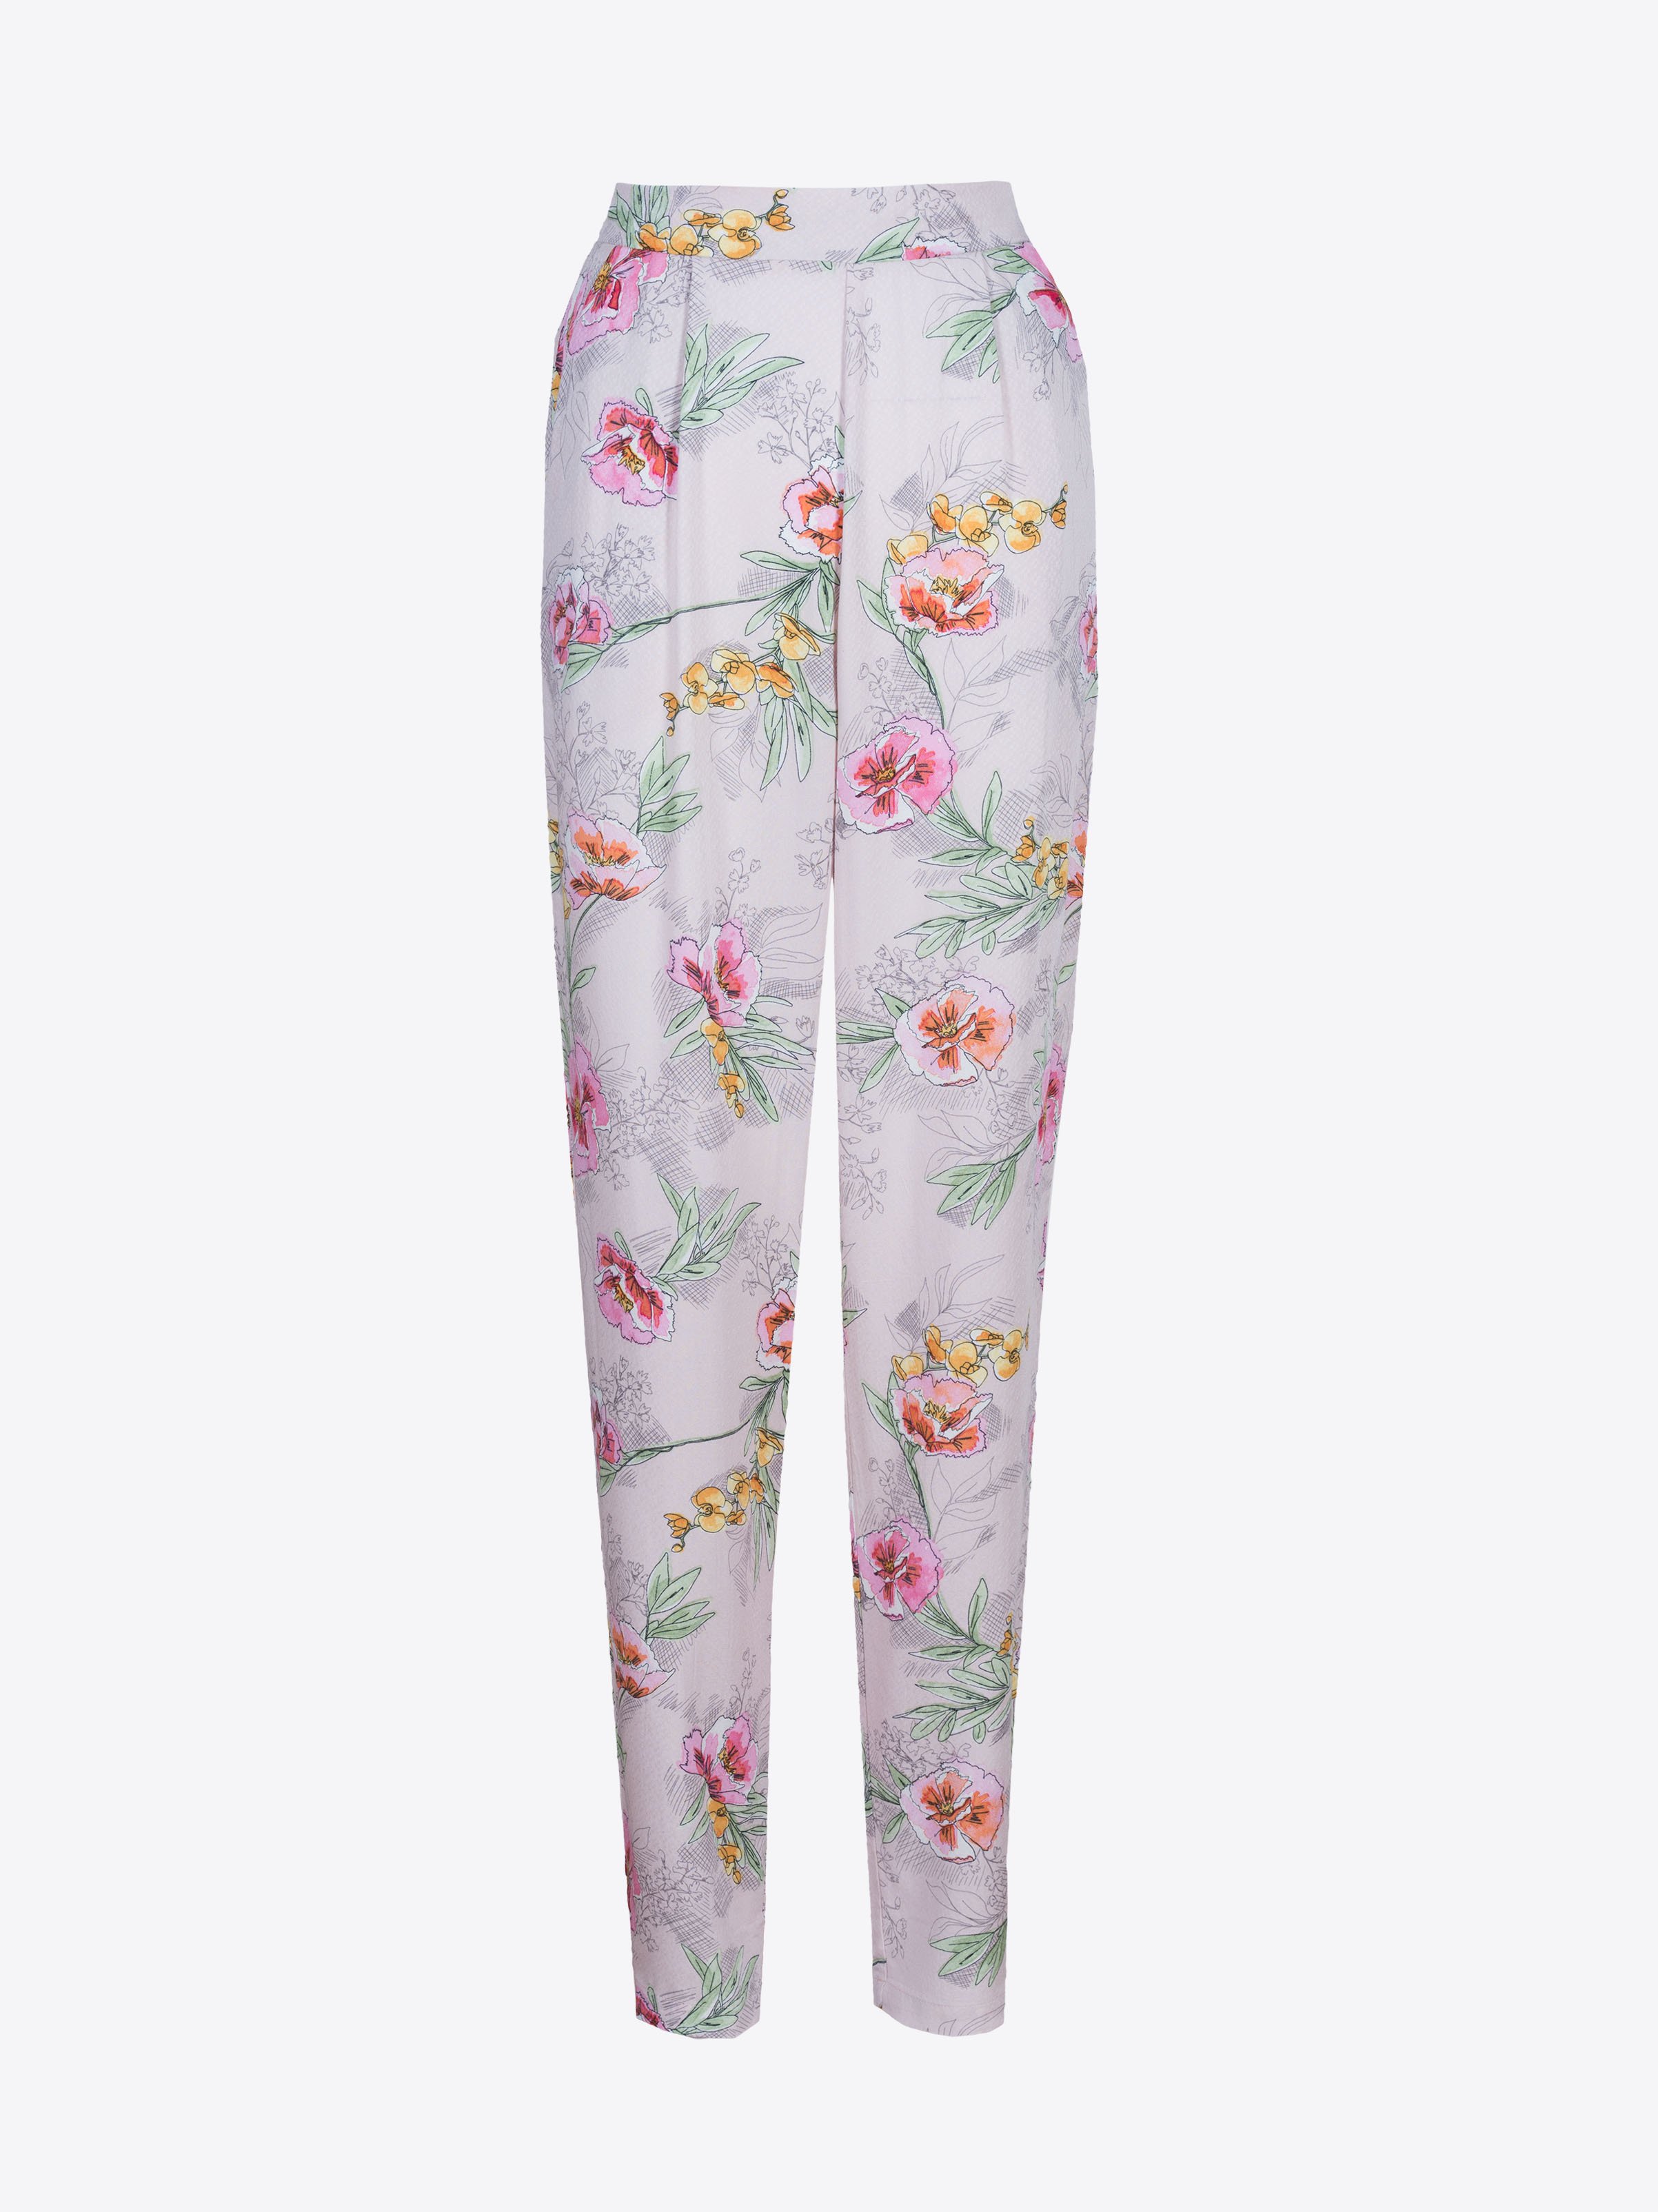 Viola Long Pajama Pants - Sweet Blossoms - $9.98 - CHANGE Lingerie